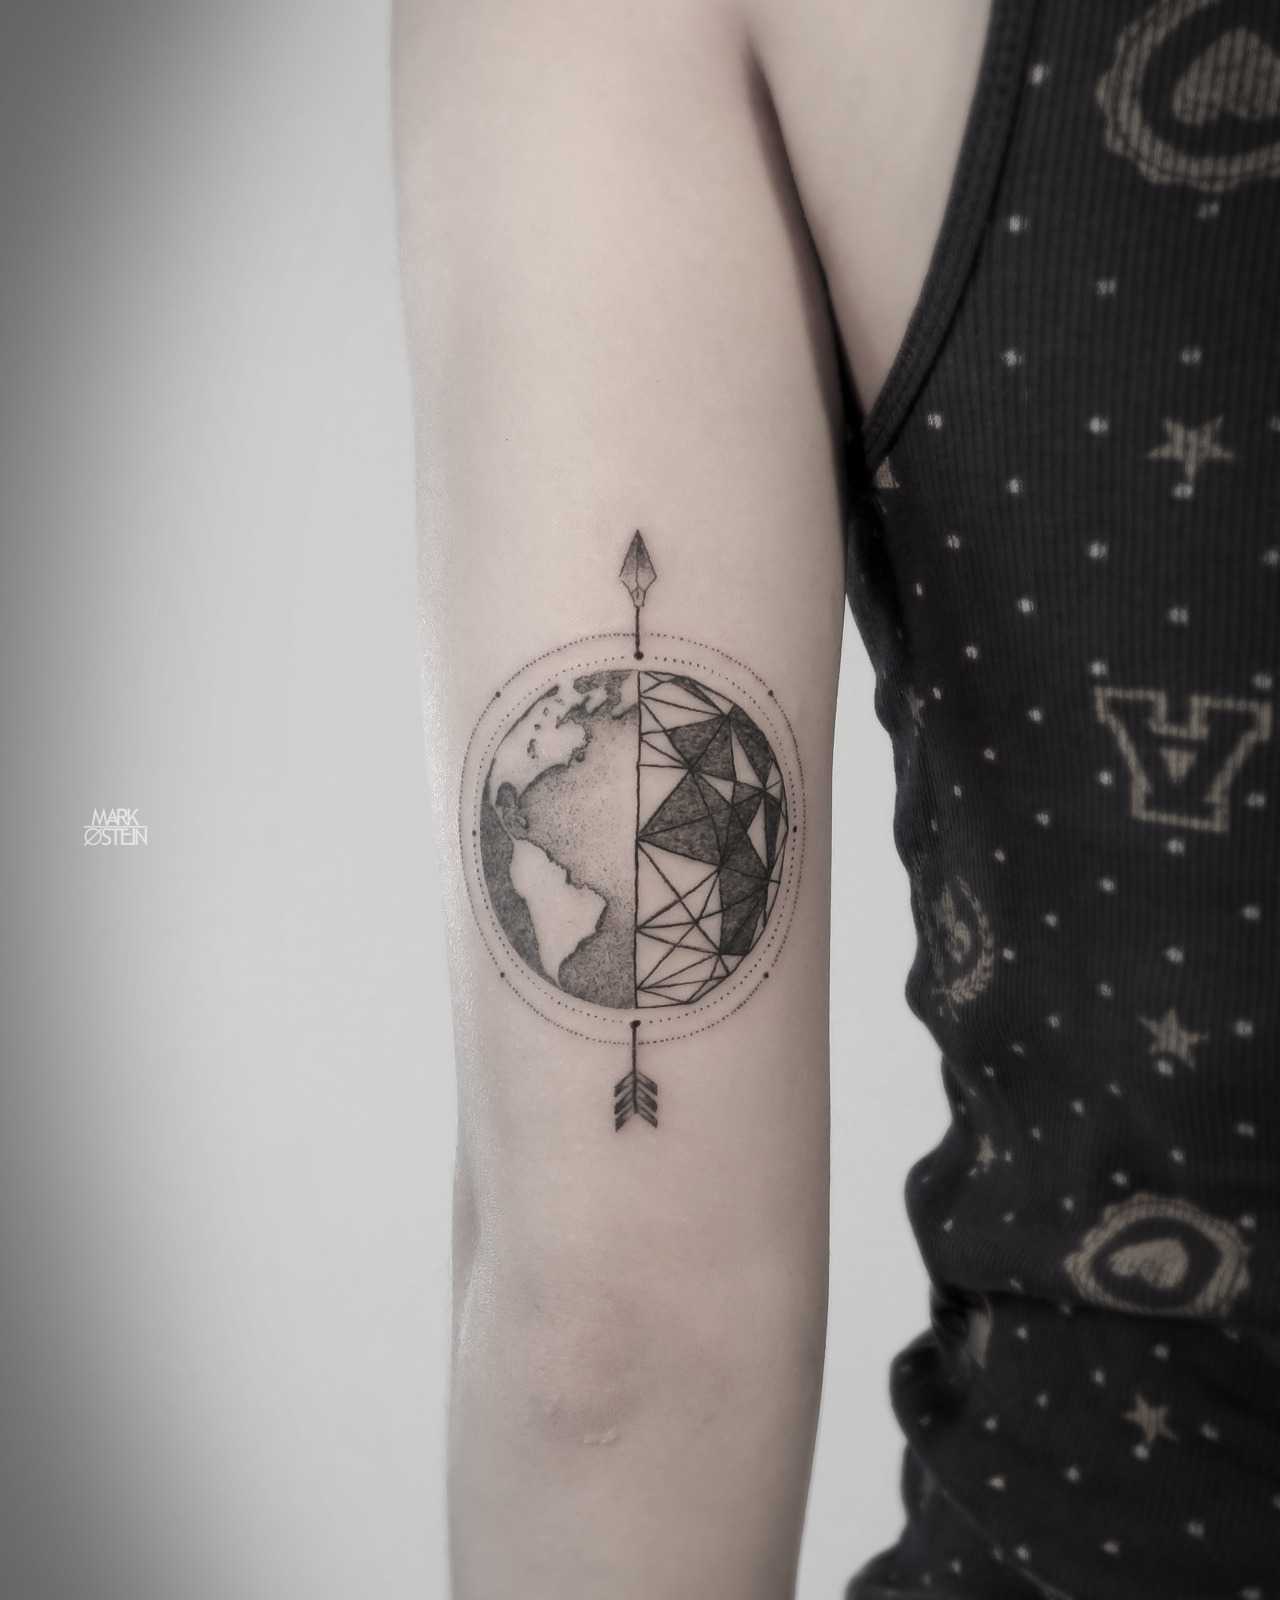 Earth and arrow tattoo